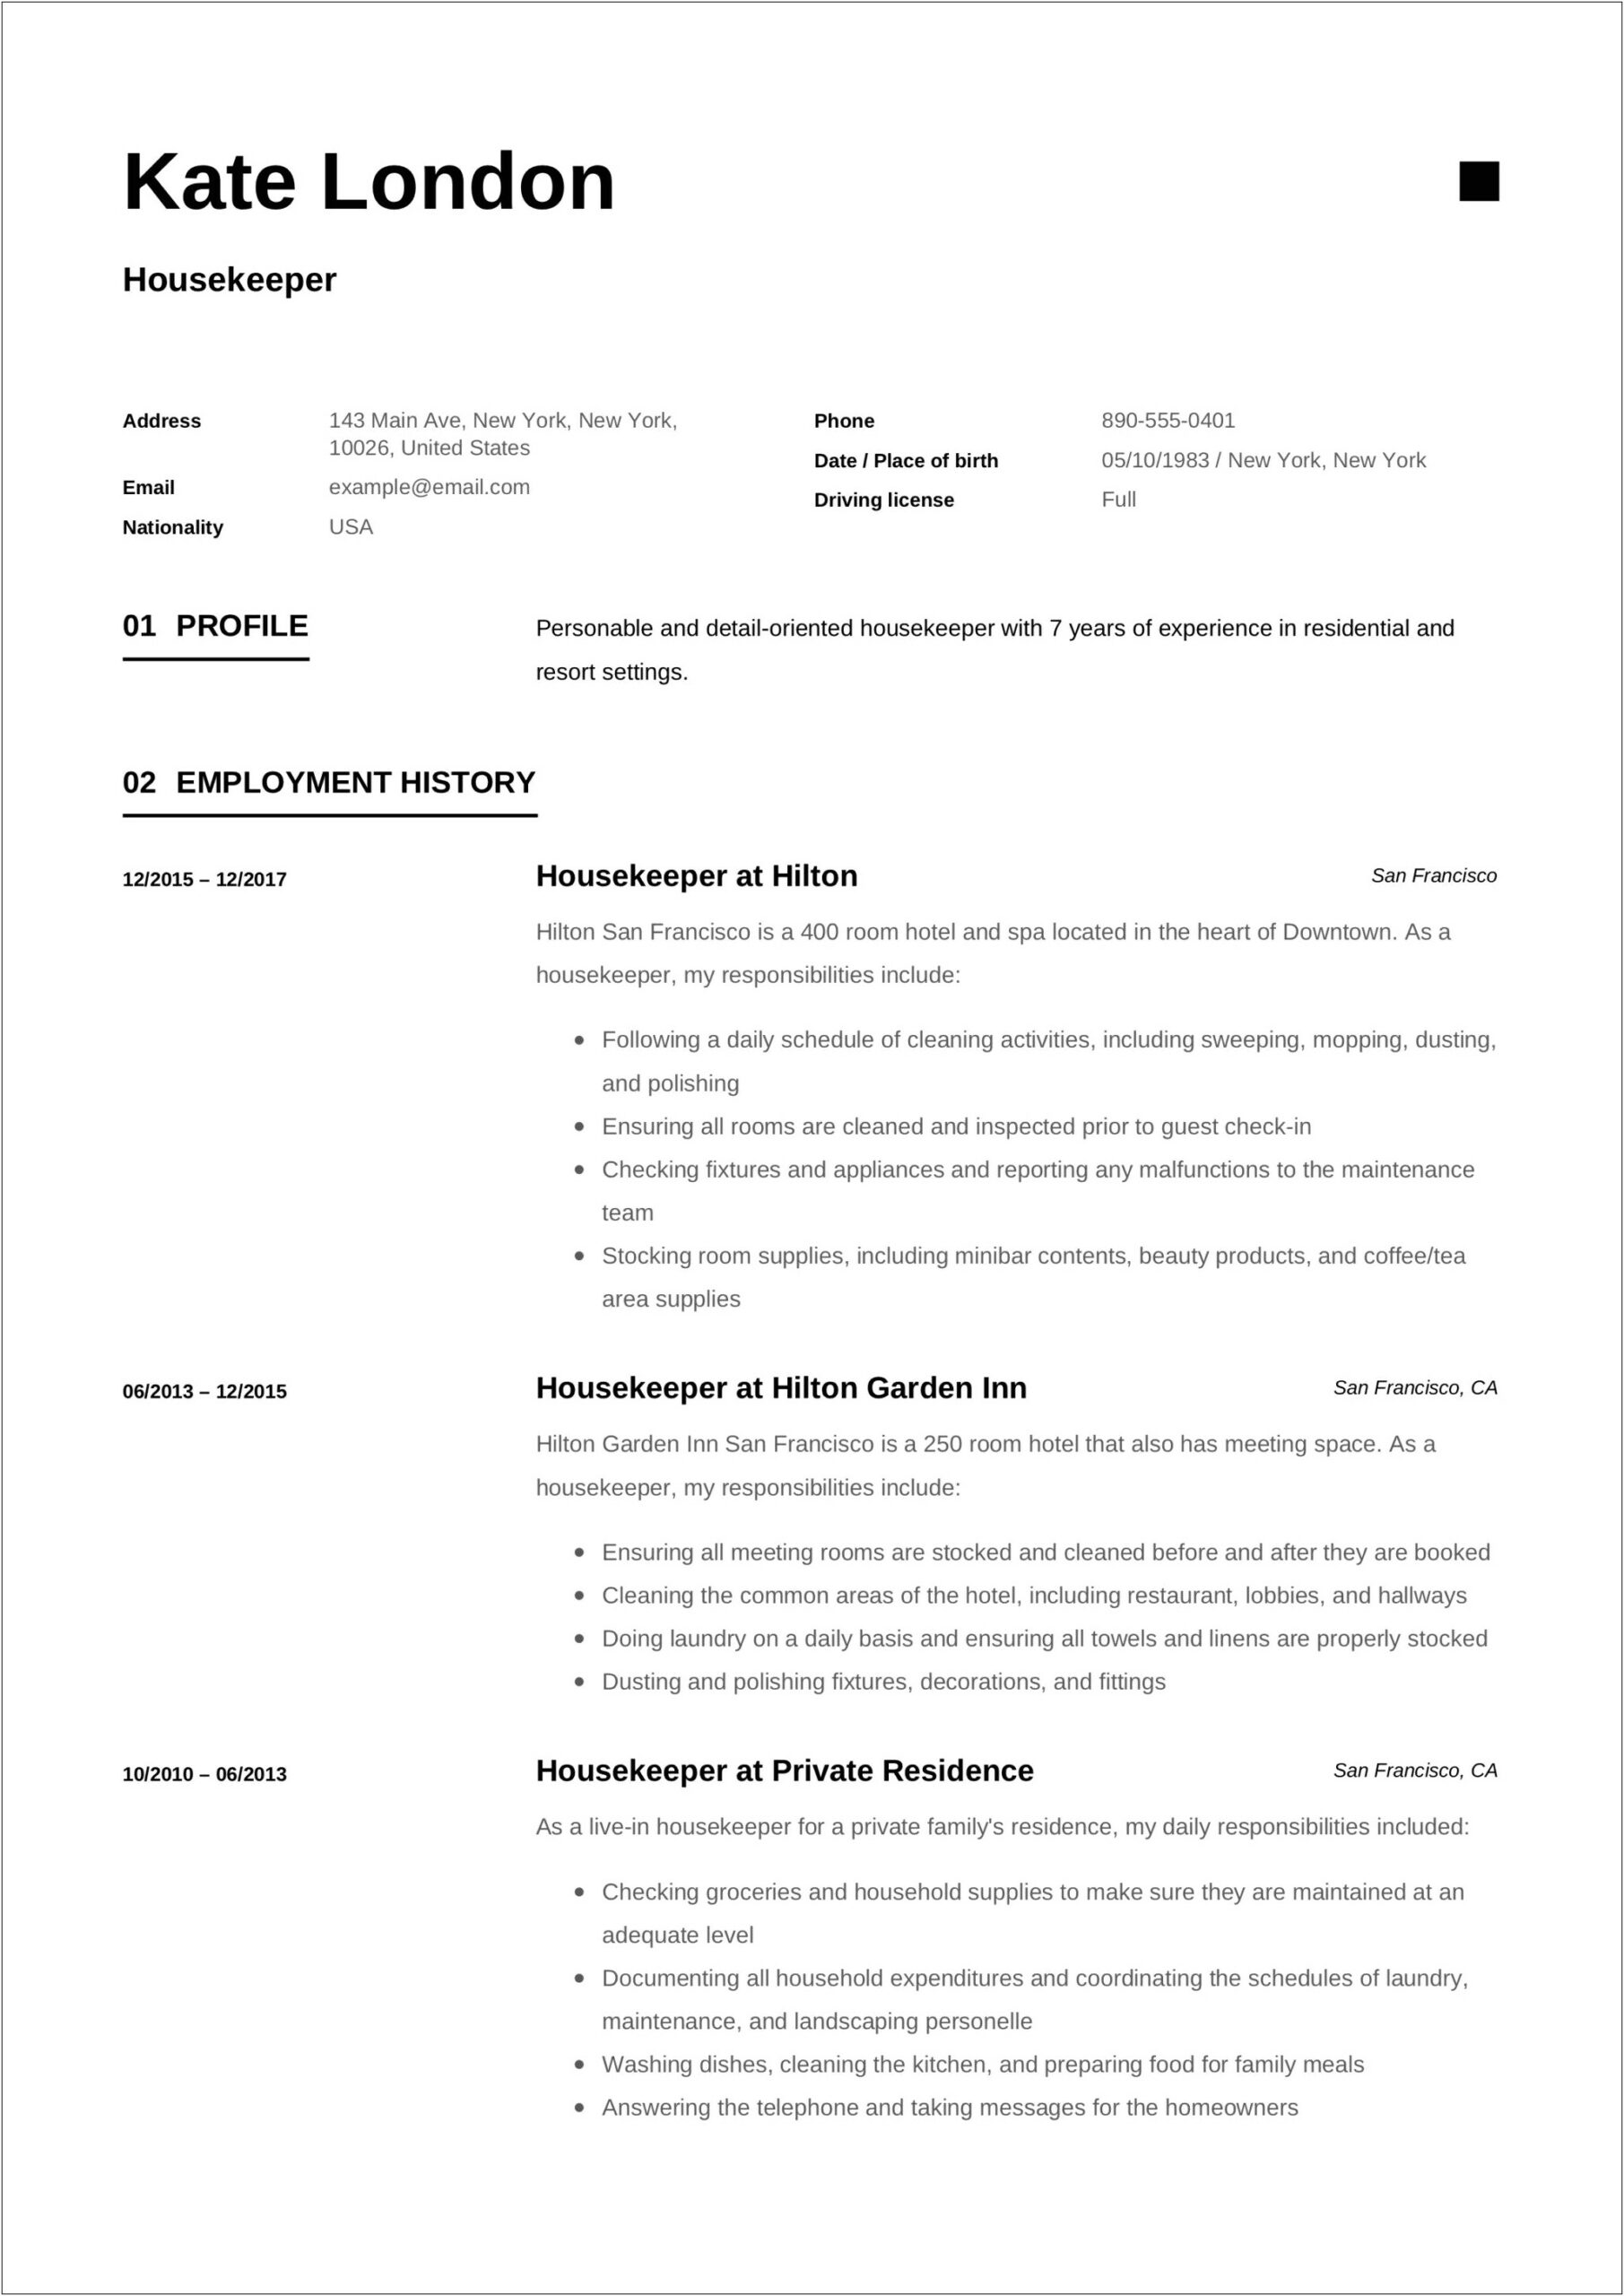 Housekeeping Manager Job Description For Resume